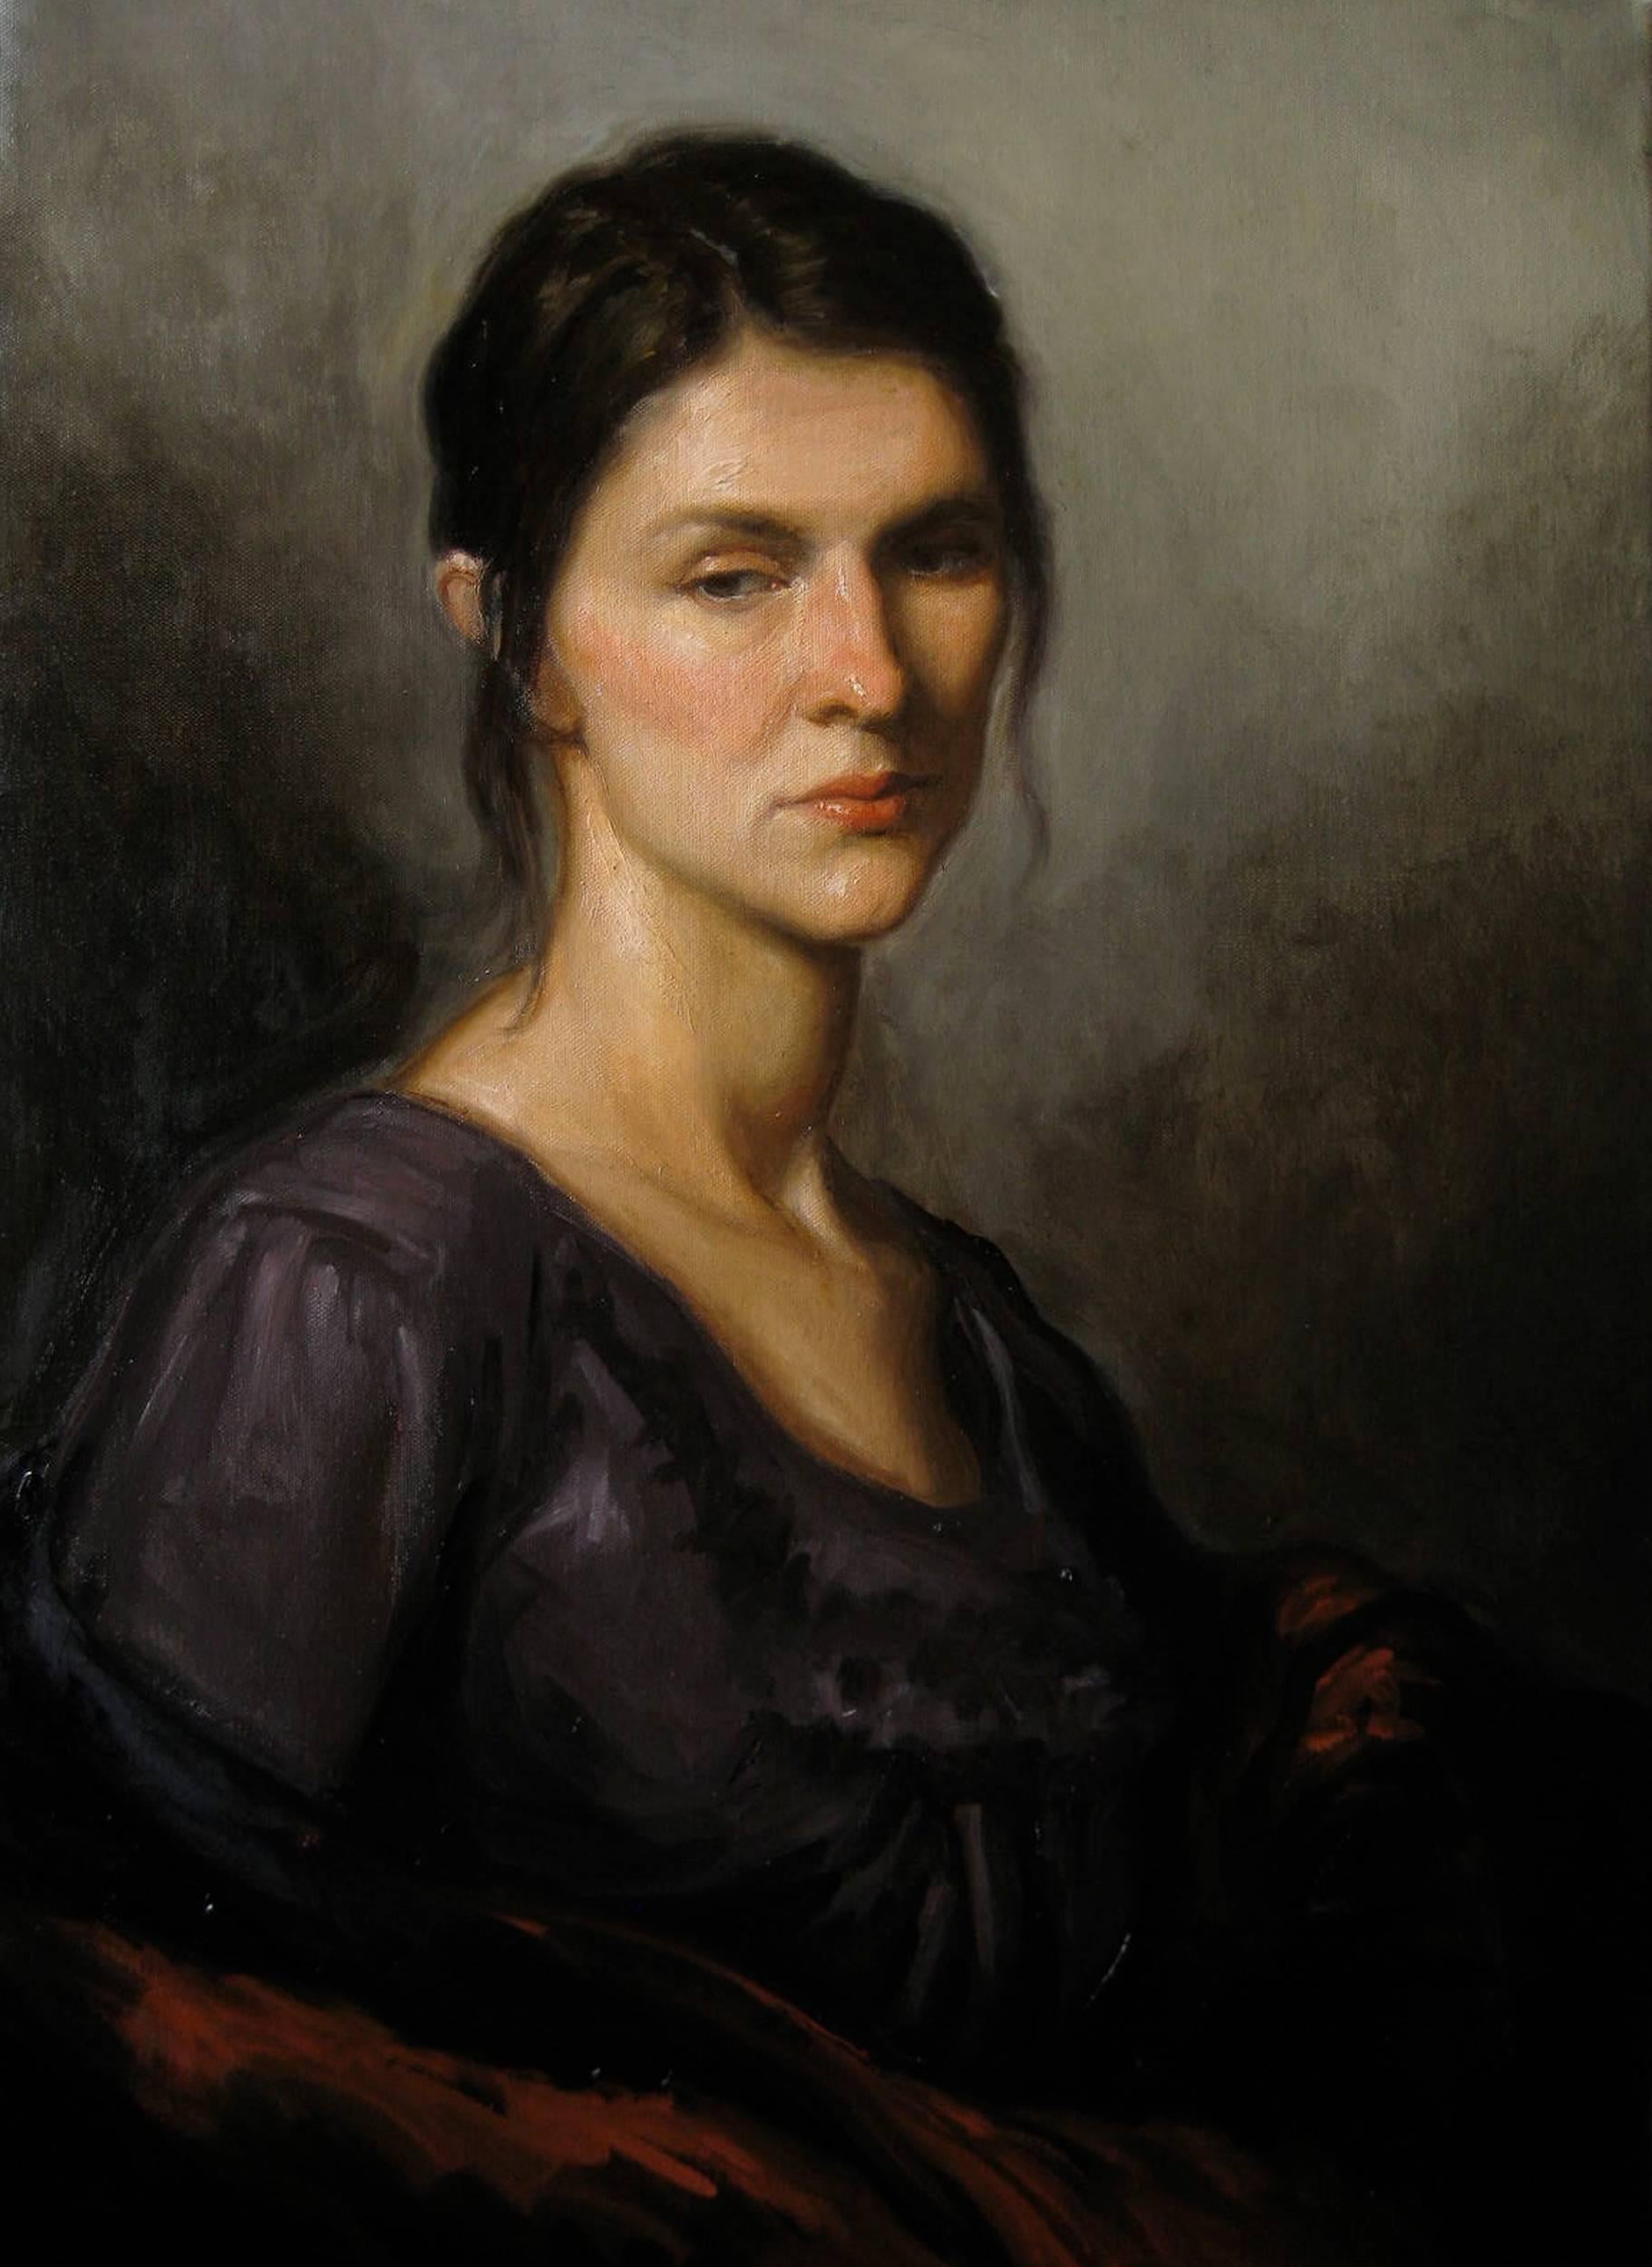 Matthew Collins Portrait Painting - The Slavic Girl